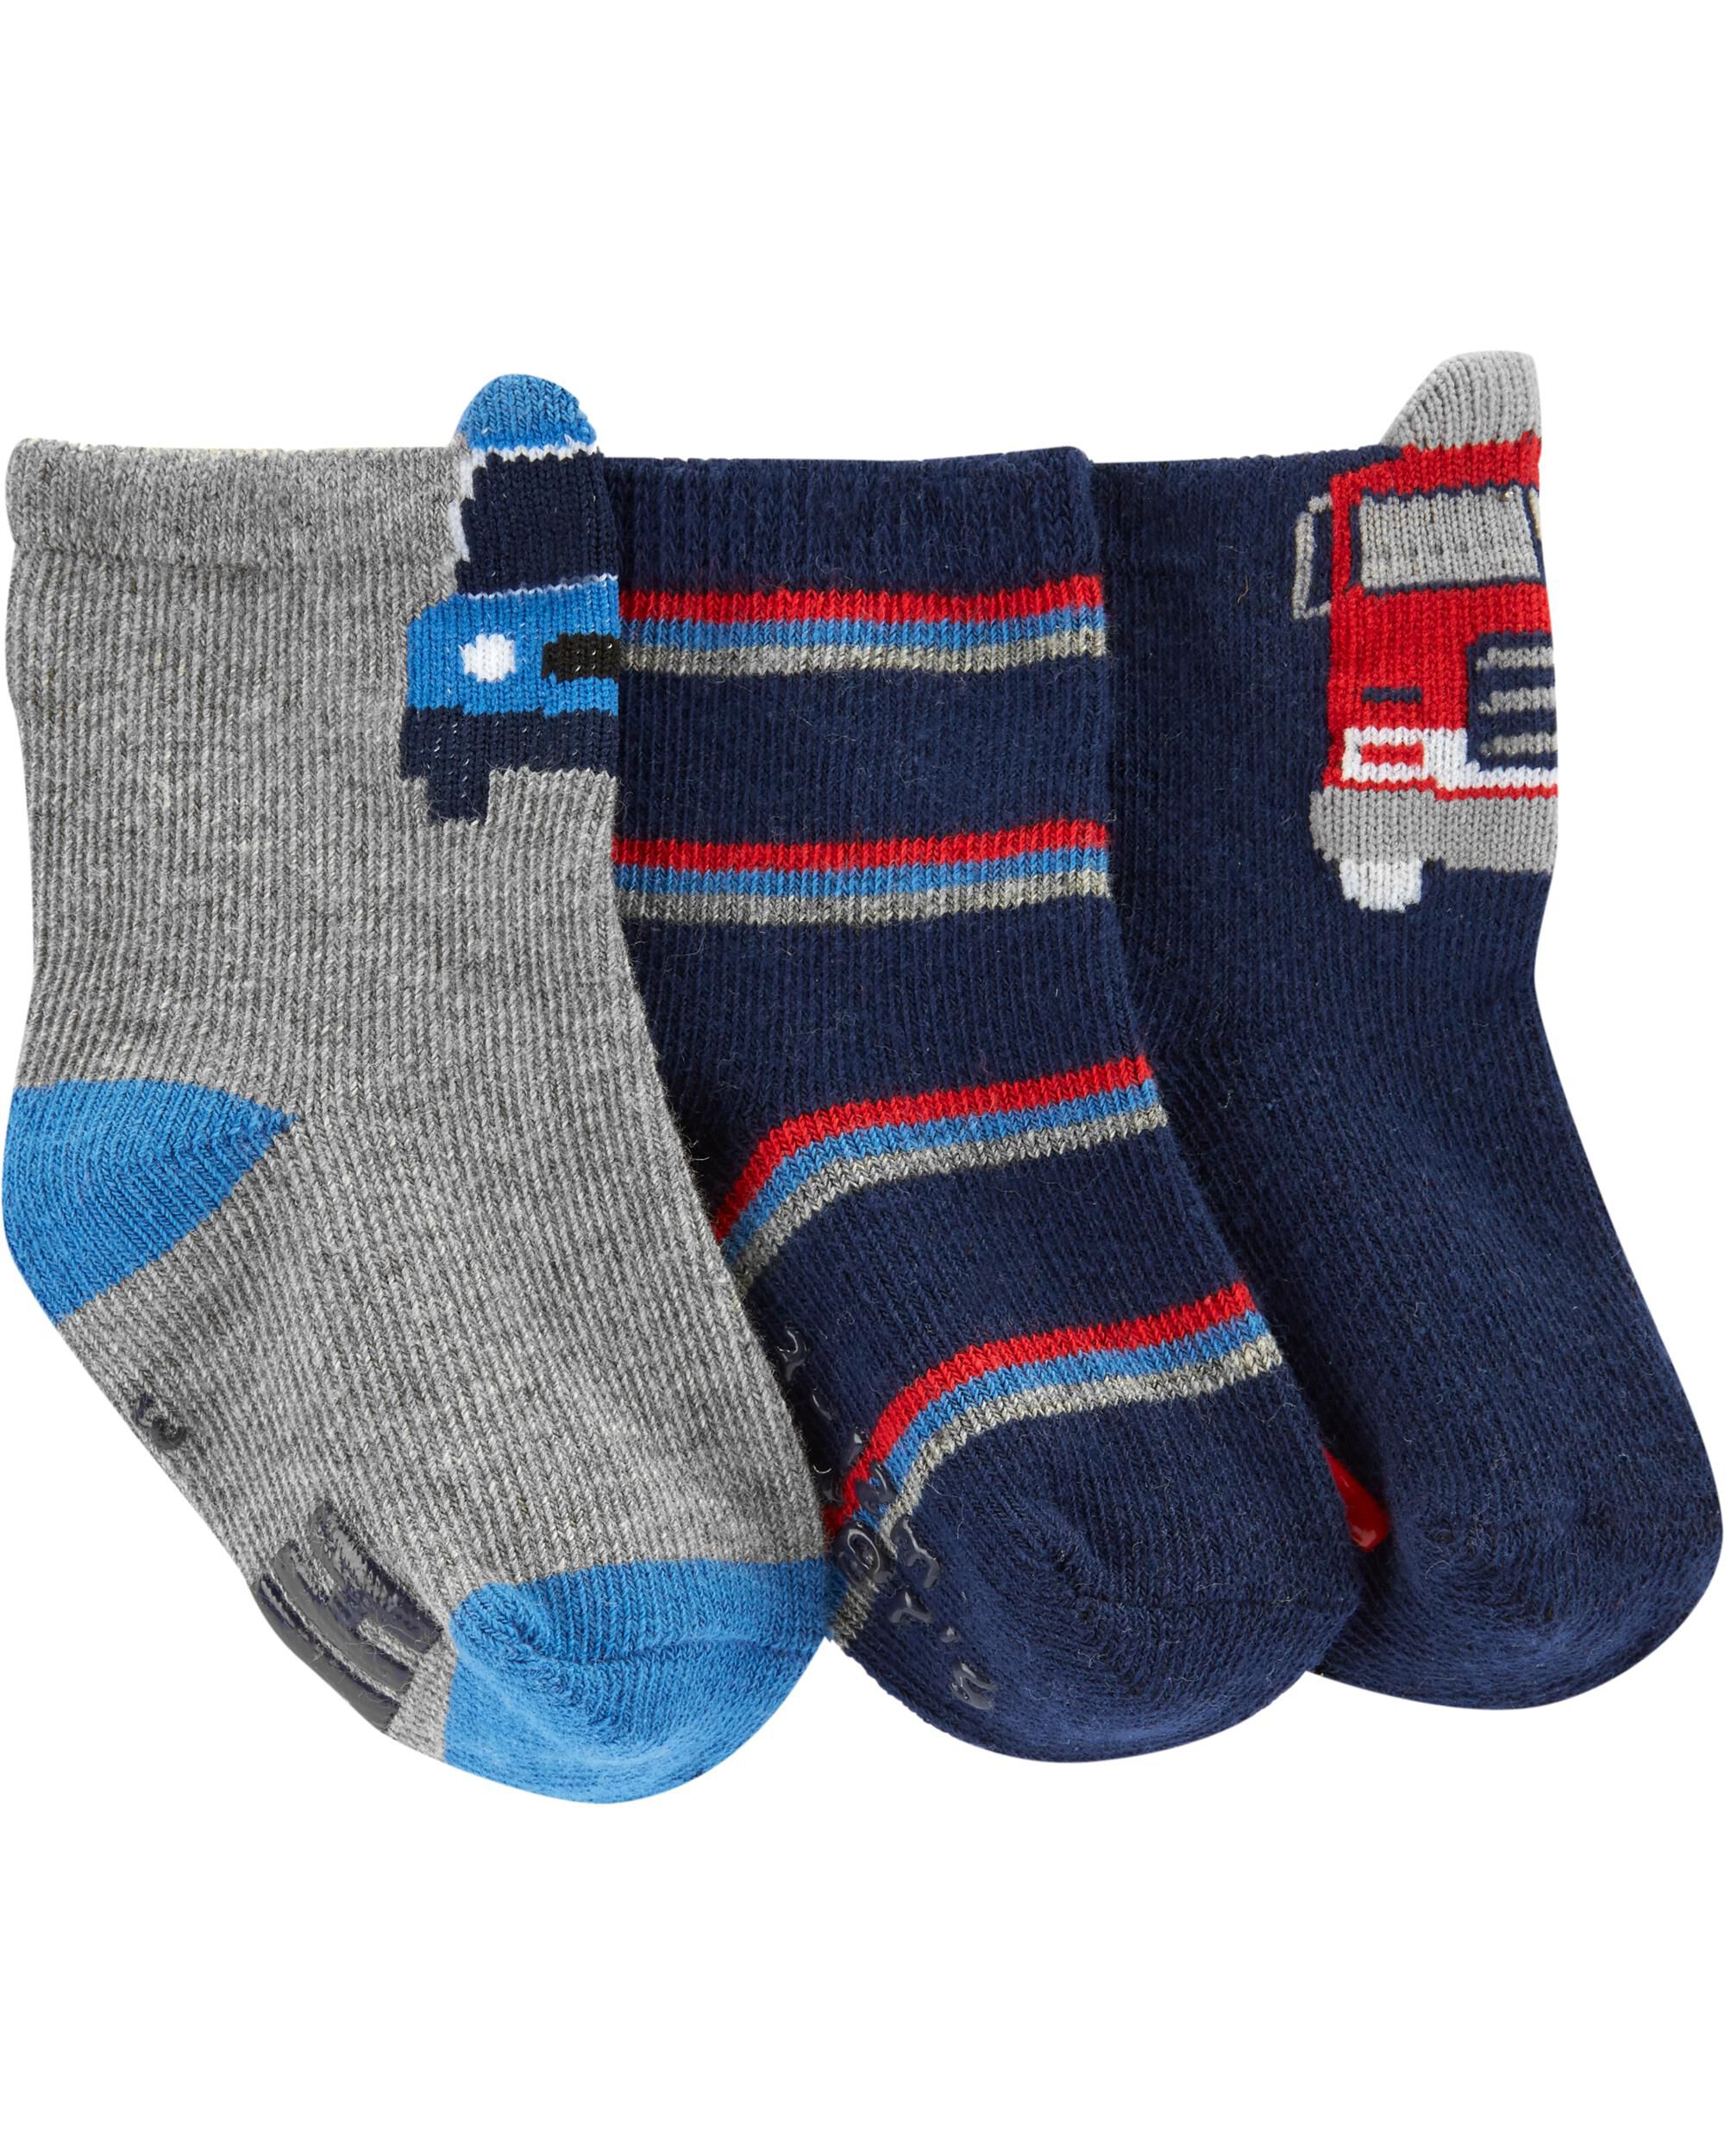 carters baby socks